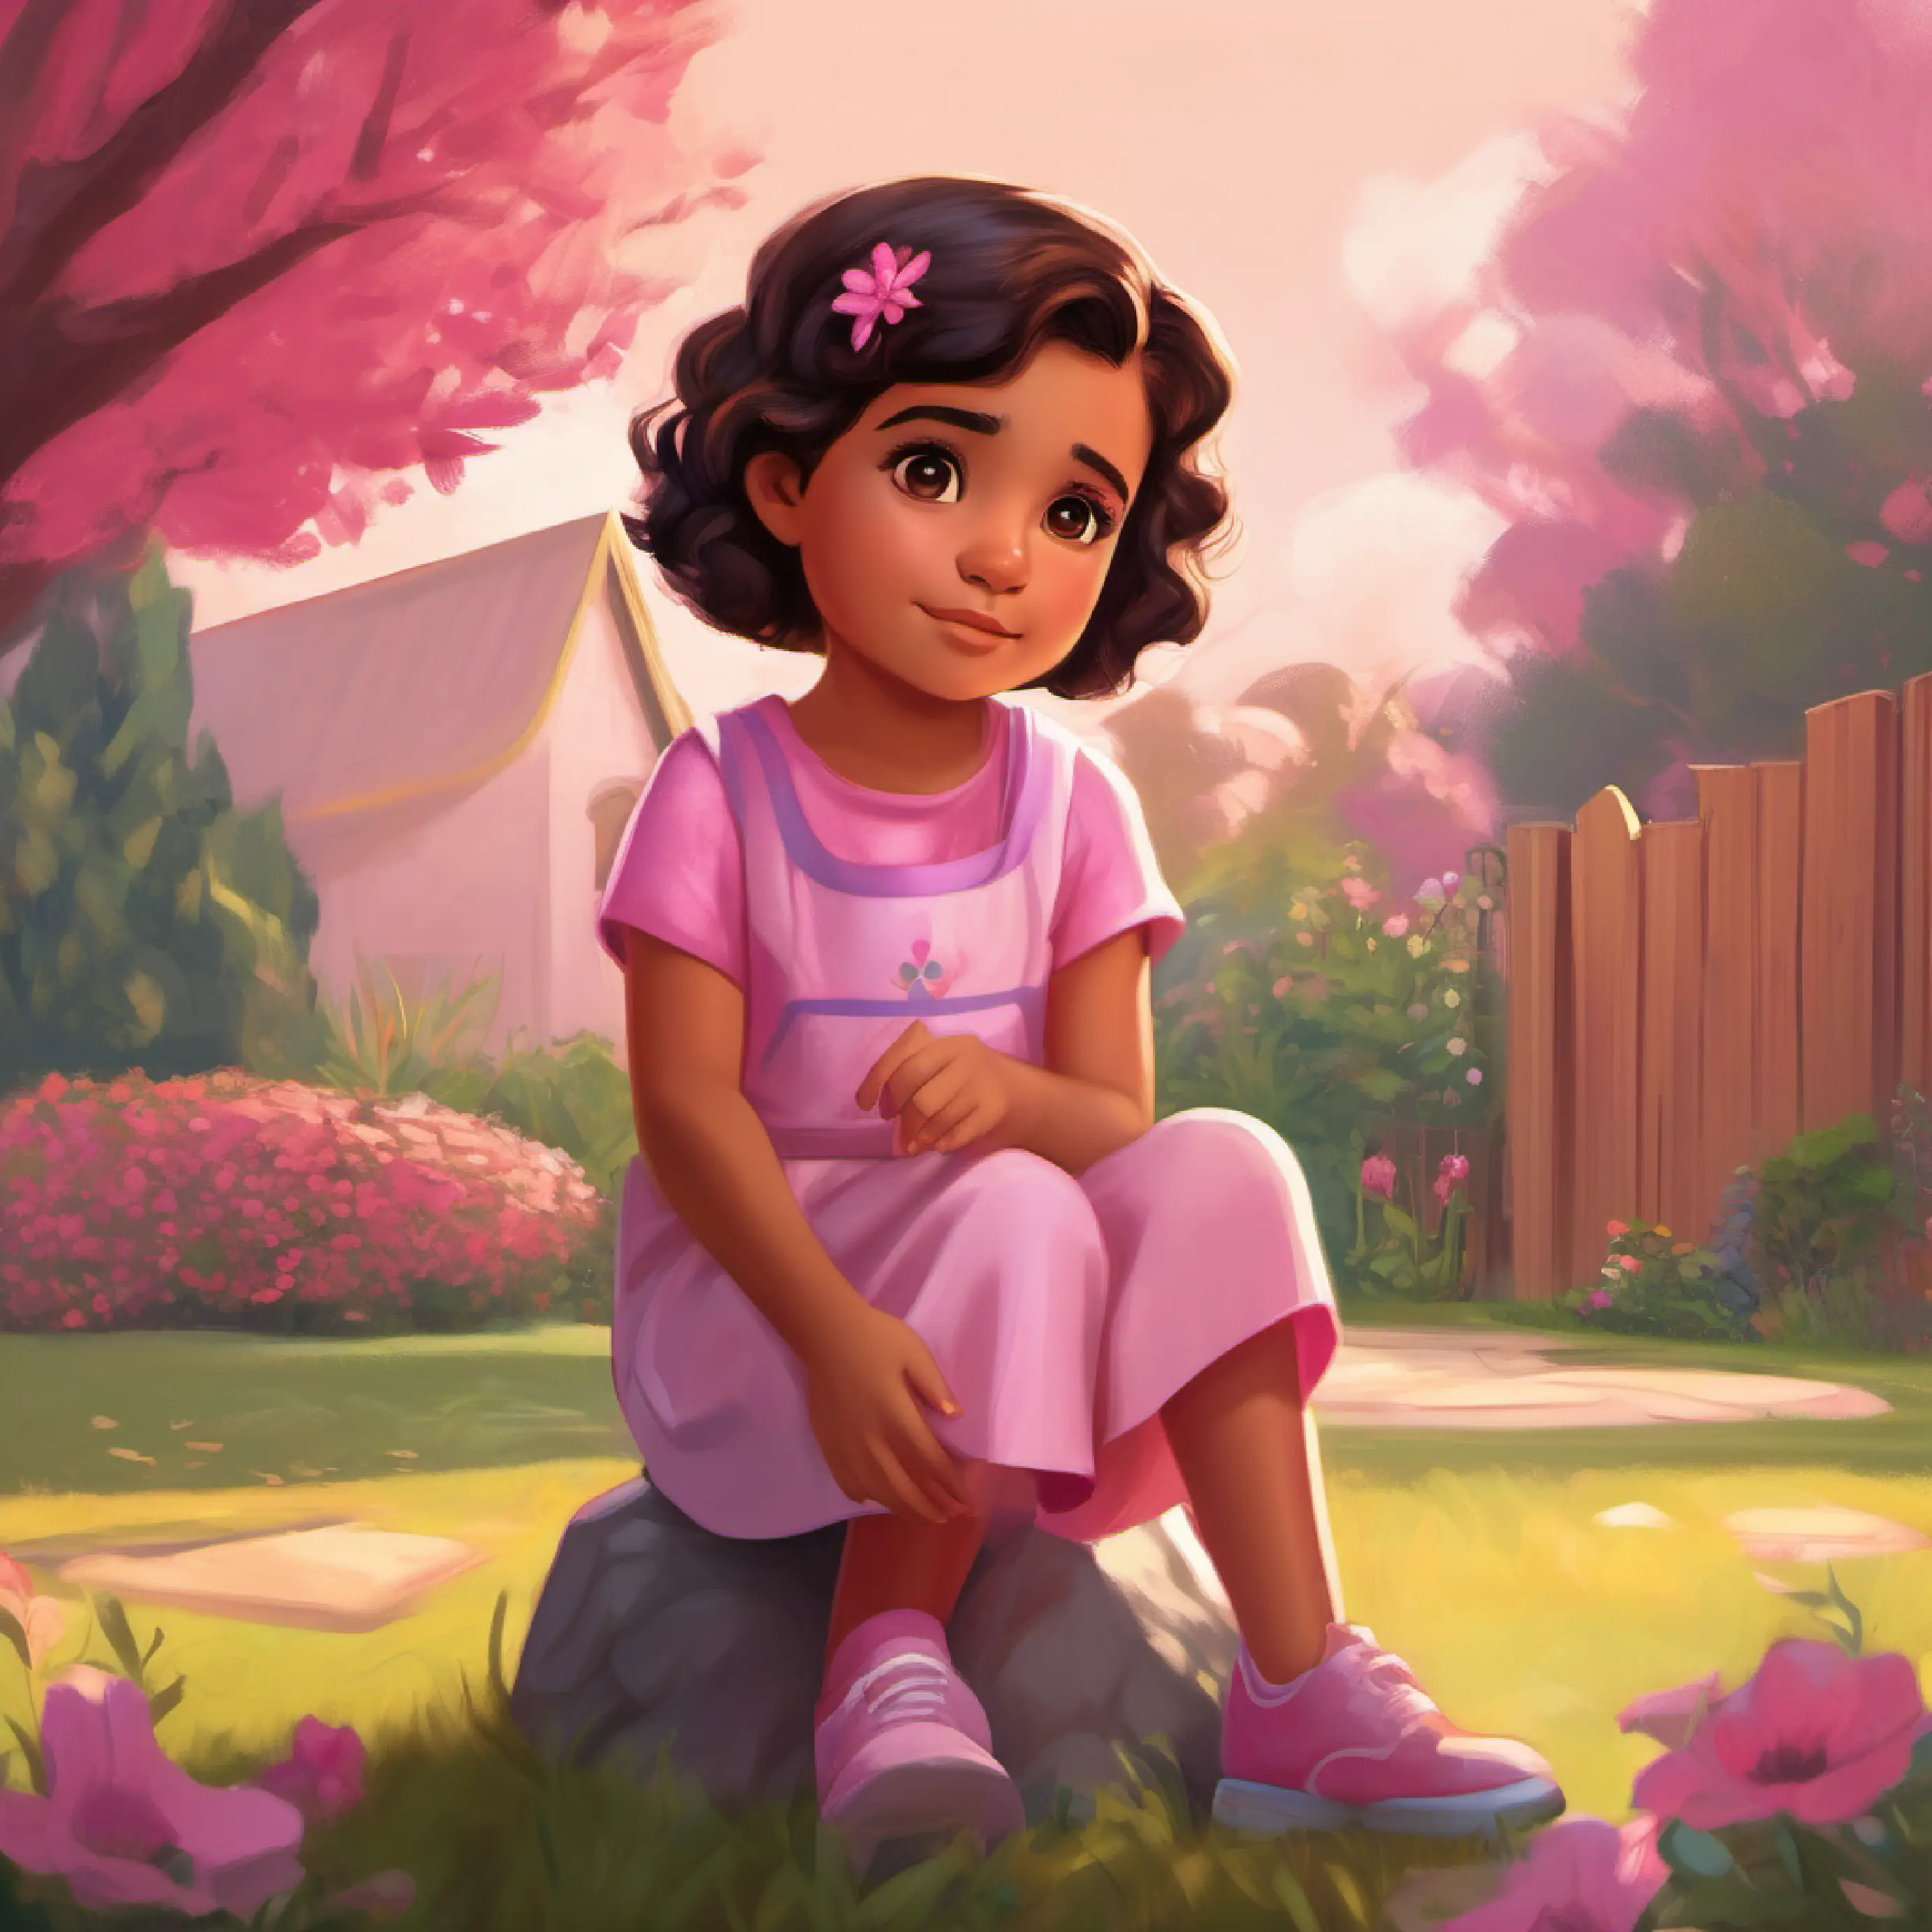 Nayeli discovers a sad, pink-winged unicorn in her backyard.